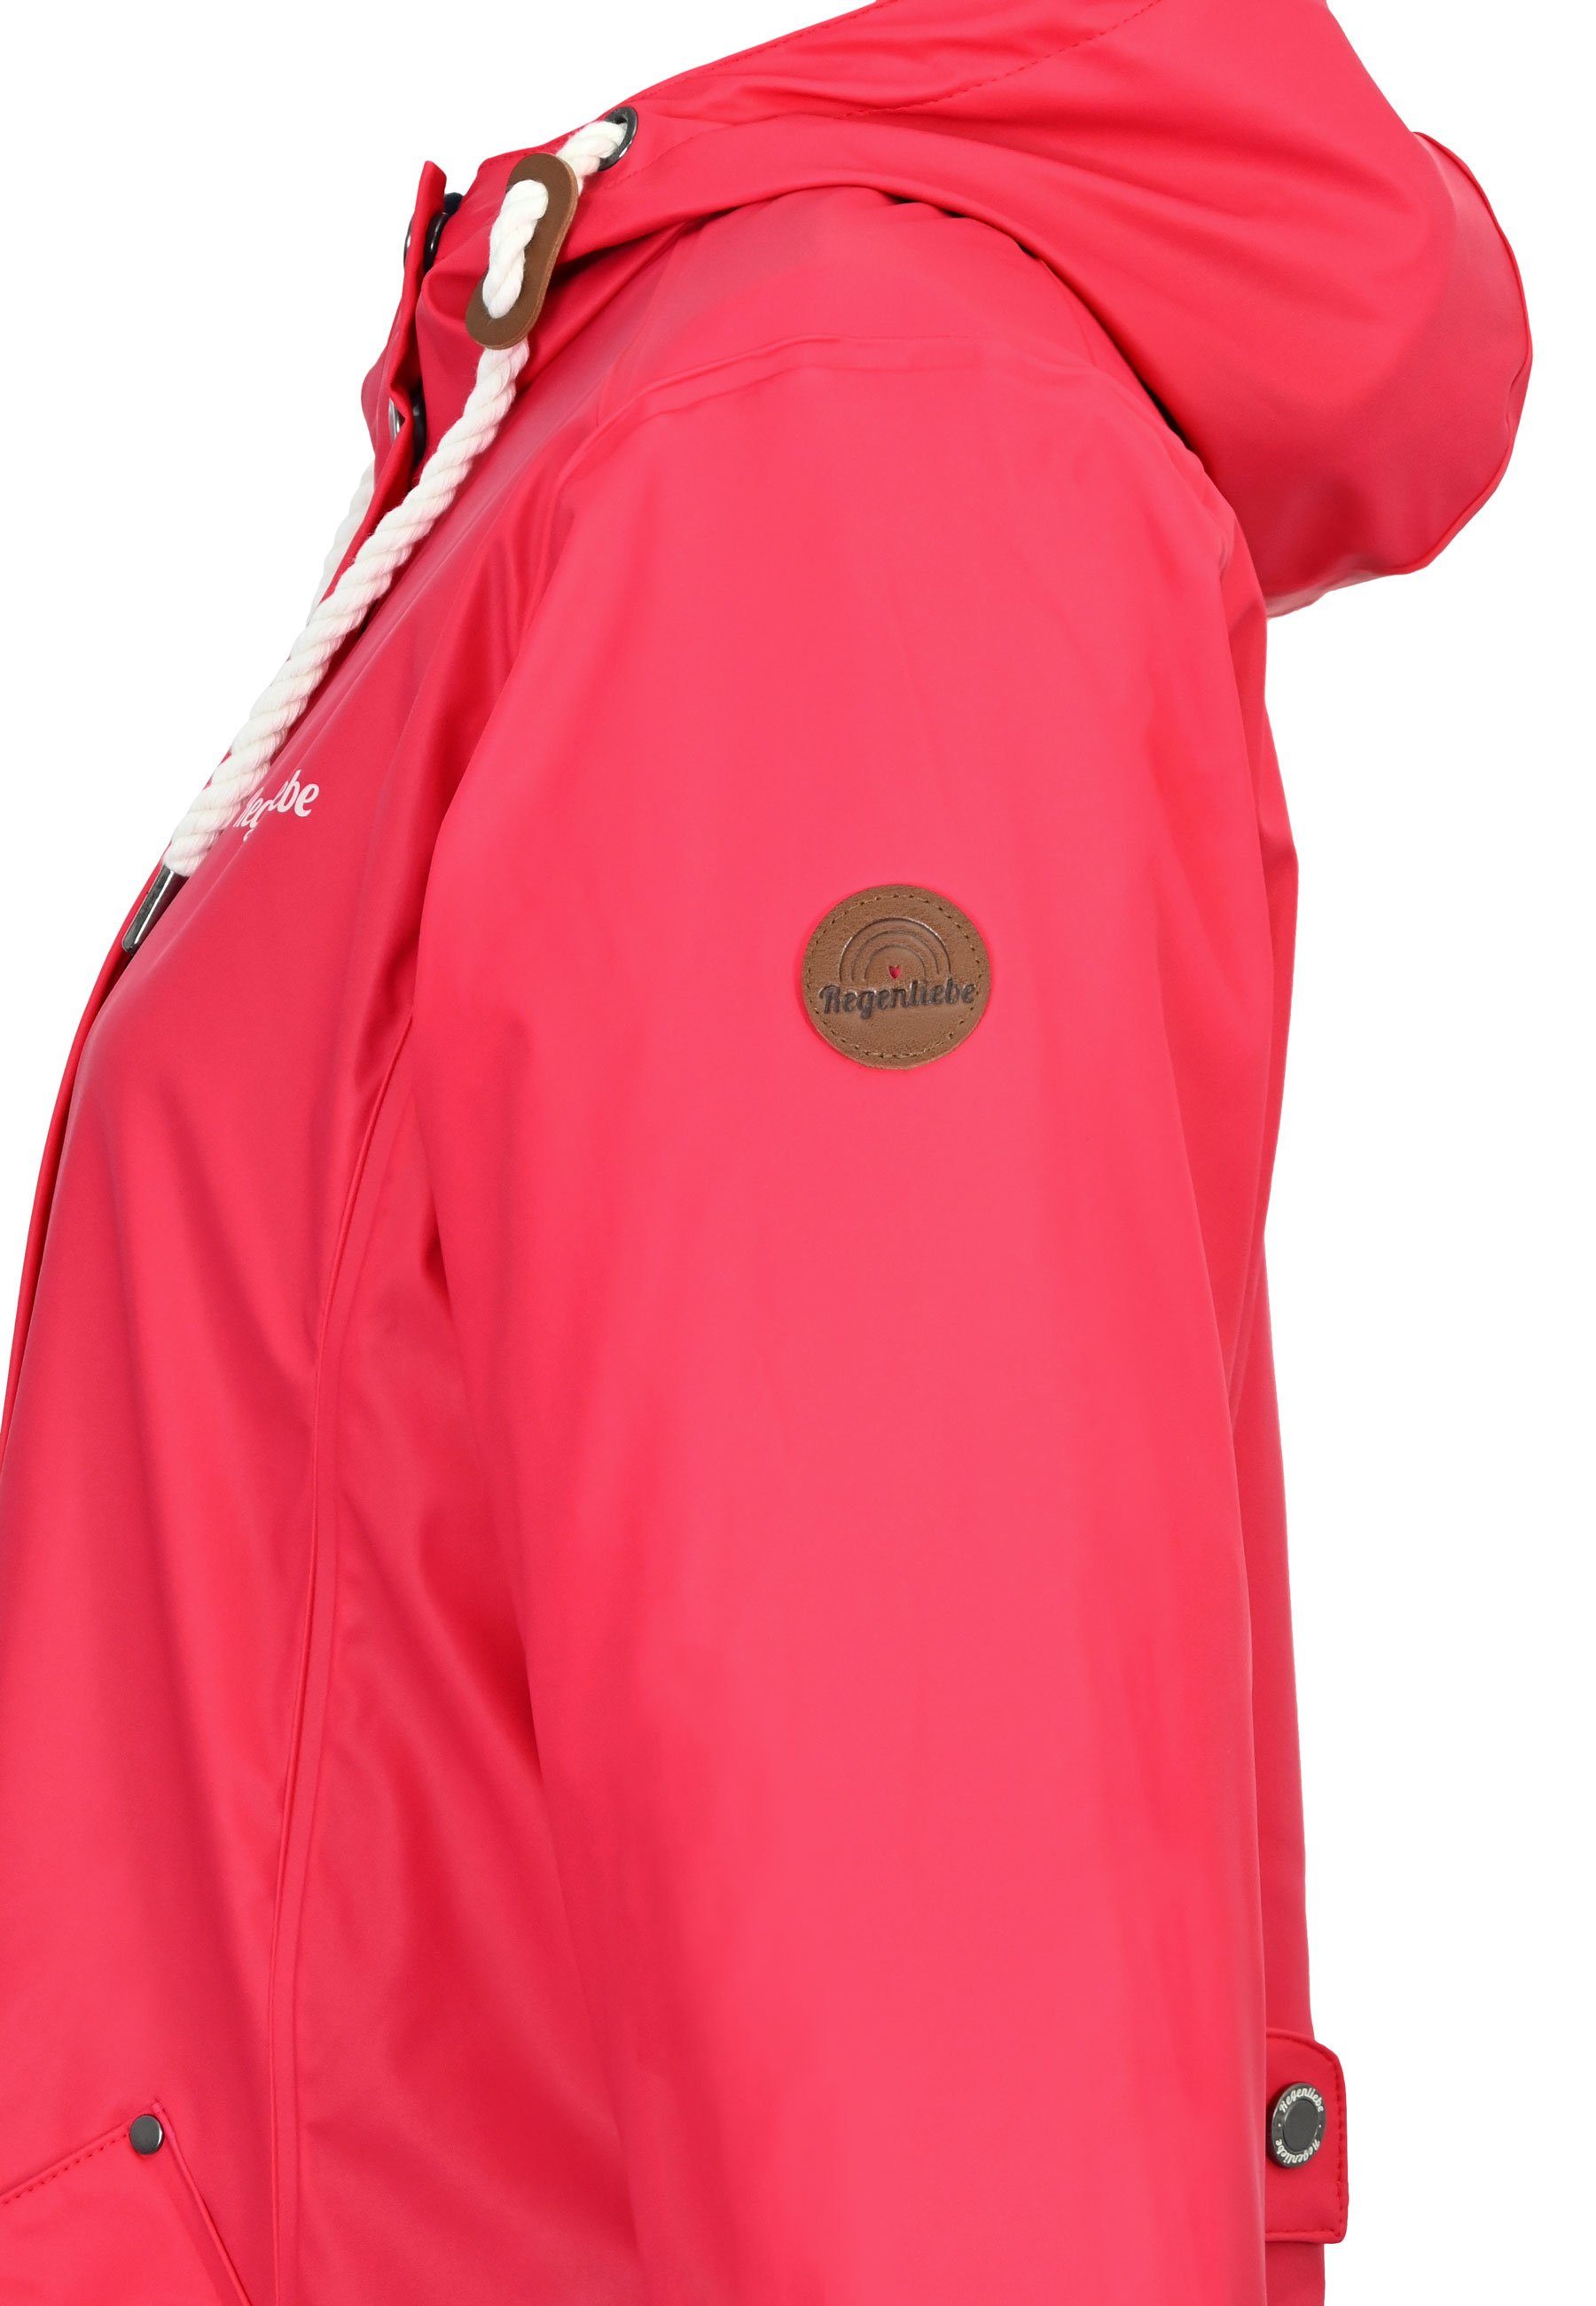 Regenliebe Regenjacke Friesennerz taillierter Kapuze verstellbaren mit azalea Regenmantel pink